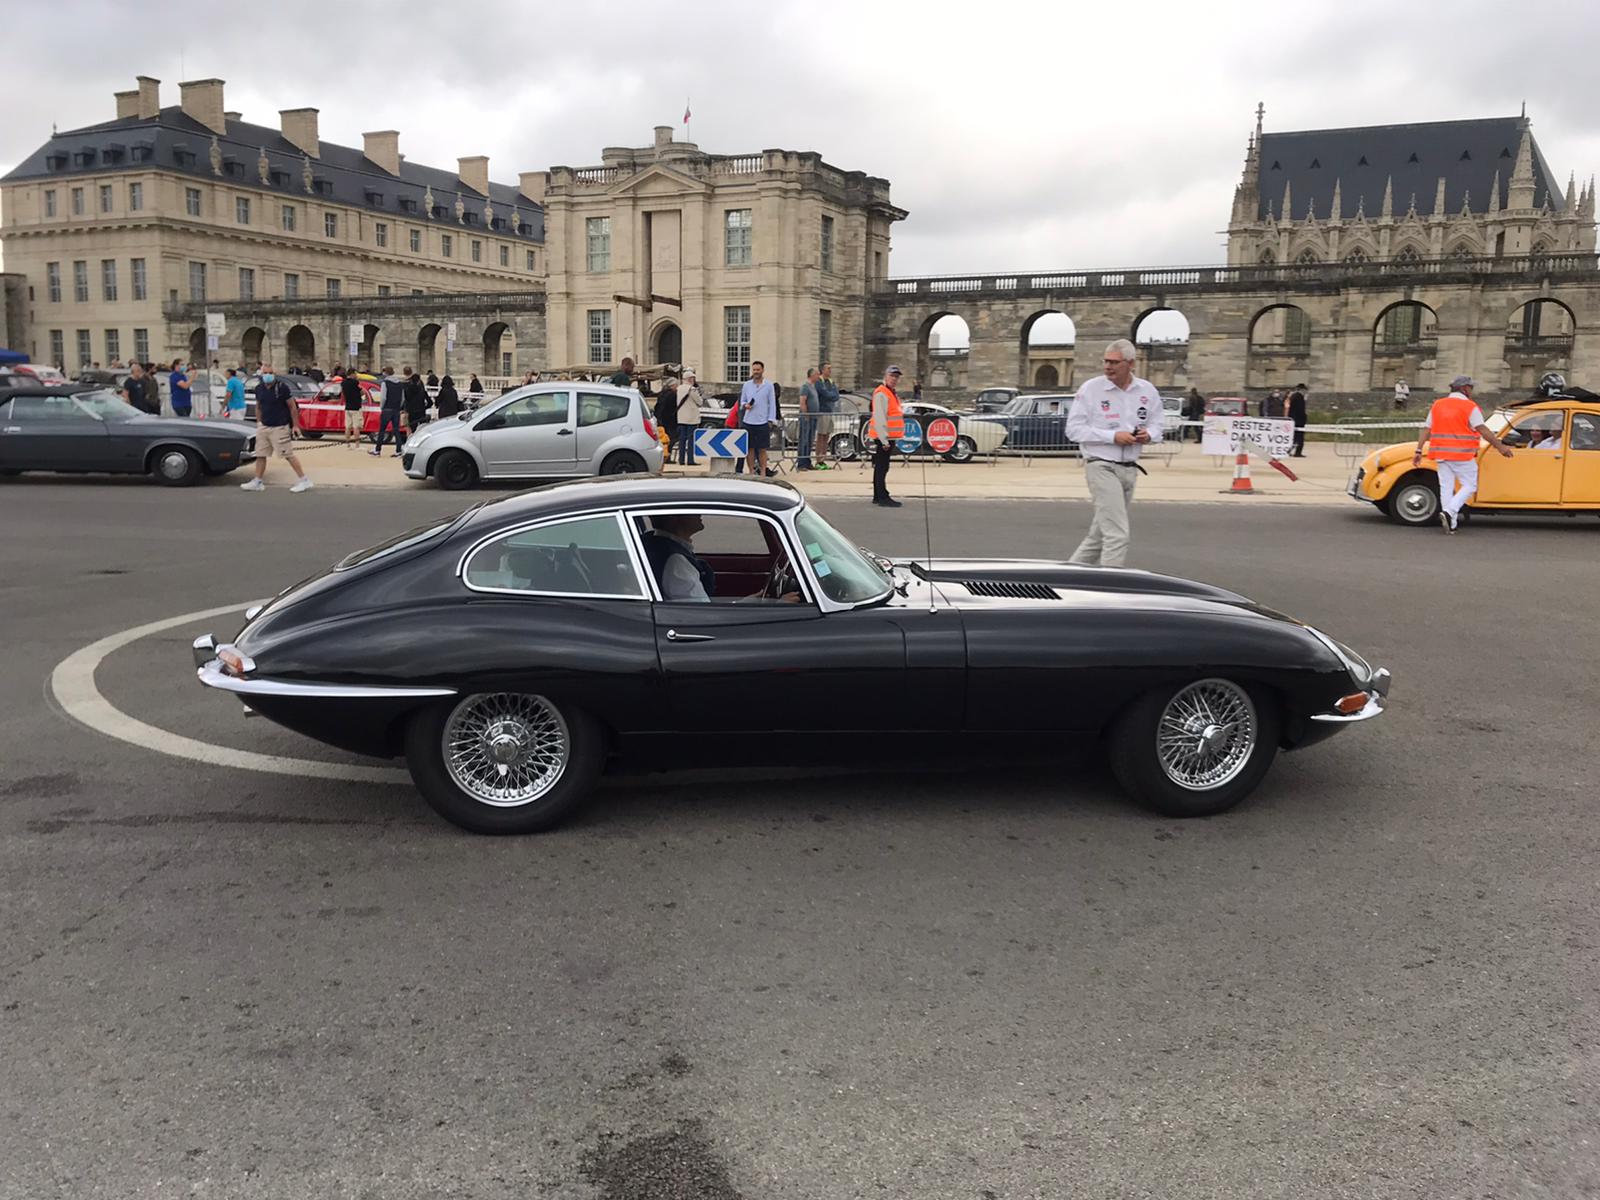 2021paris 14e Traversée de Paris Estivale - SemanalClásico - Revista online de coches clásicos, de colección y sport